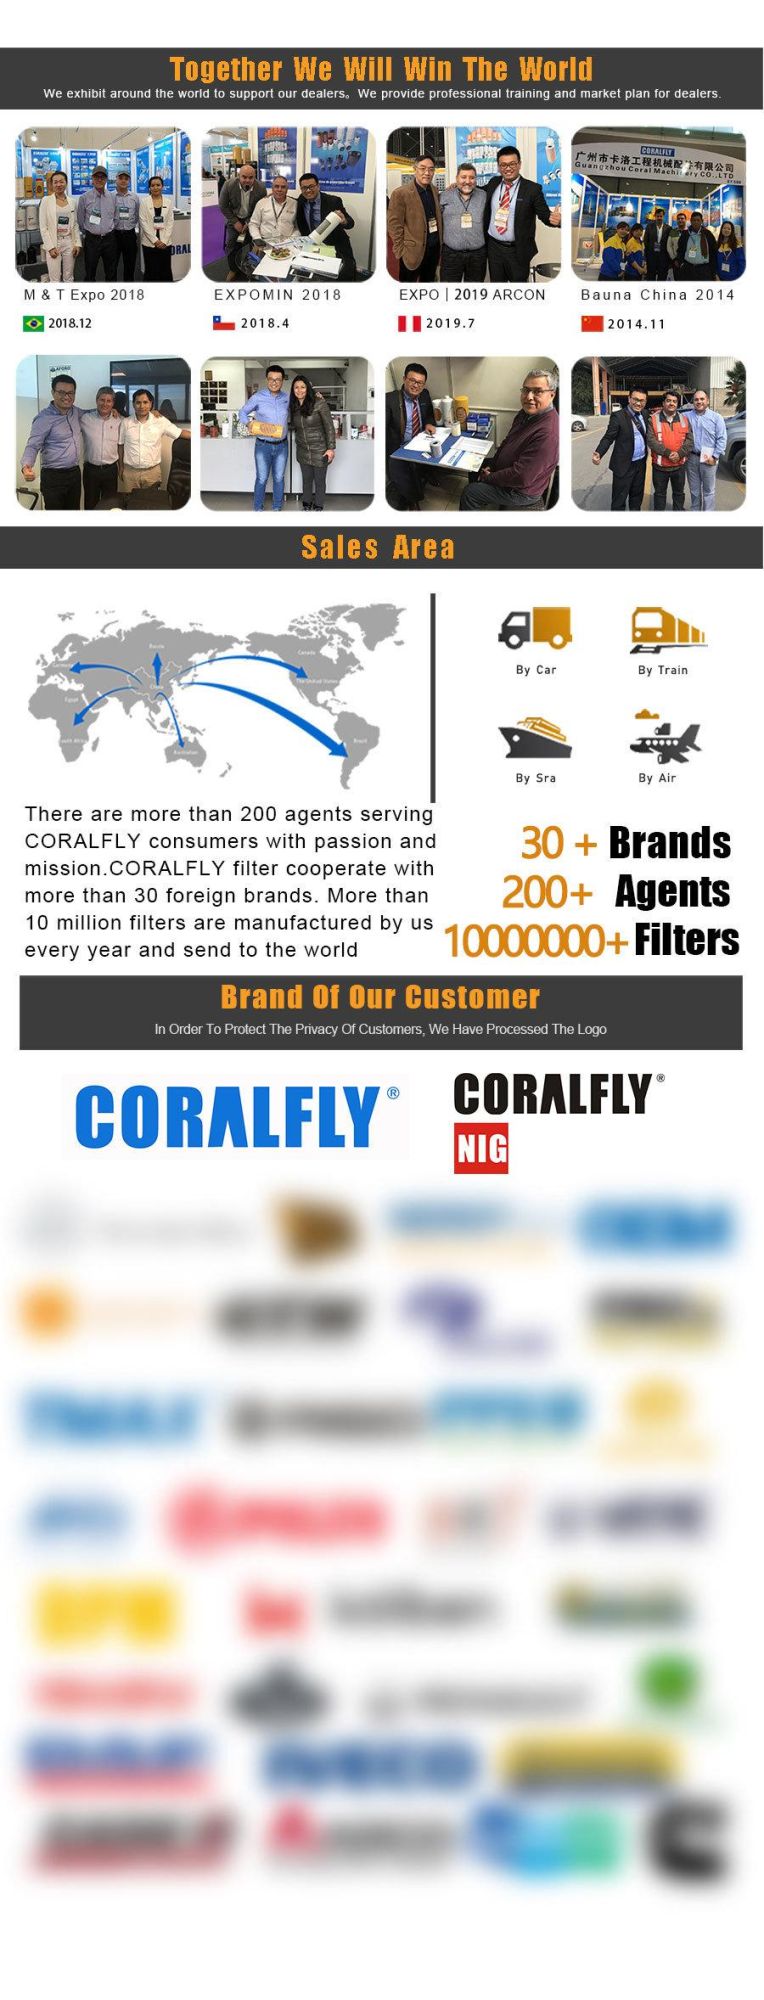 Coralfly Air Filter 30830-19200 AA6100A/W MD603932 MD603629 Af4944 P50-0008 Wa7619 C1891 Me053214 4211-03 for Mitsubishi/Donaldson/Micro/Fleetguard/Mann